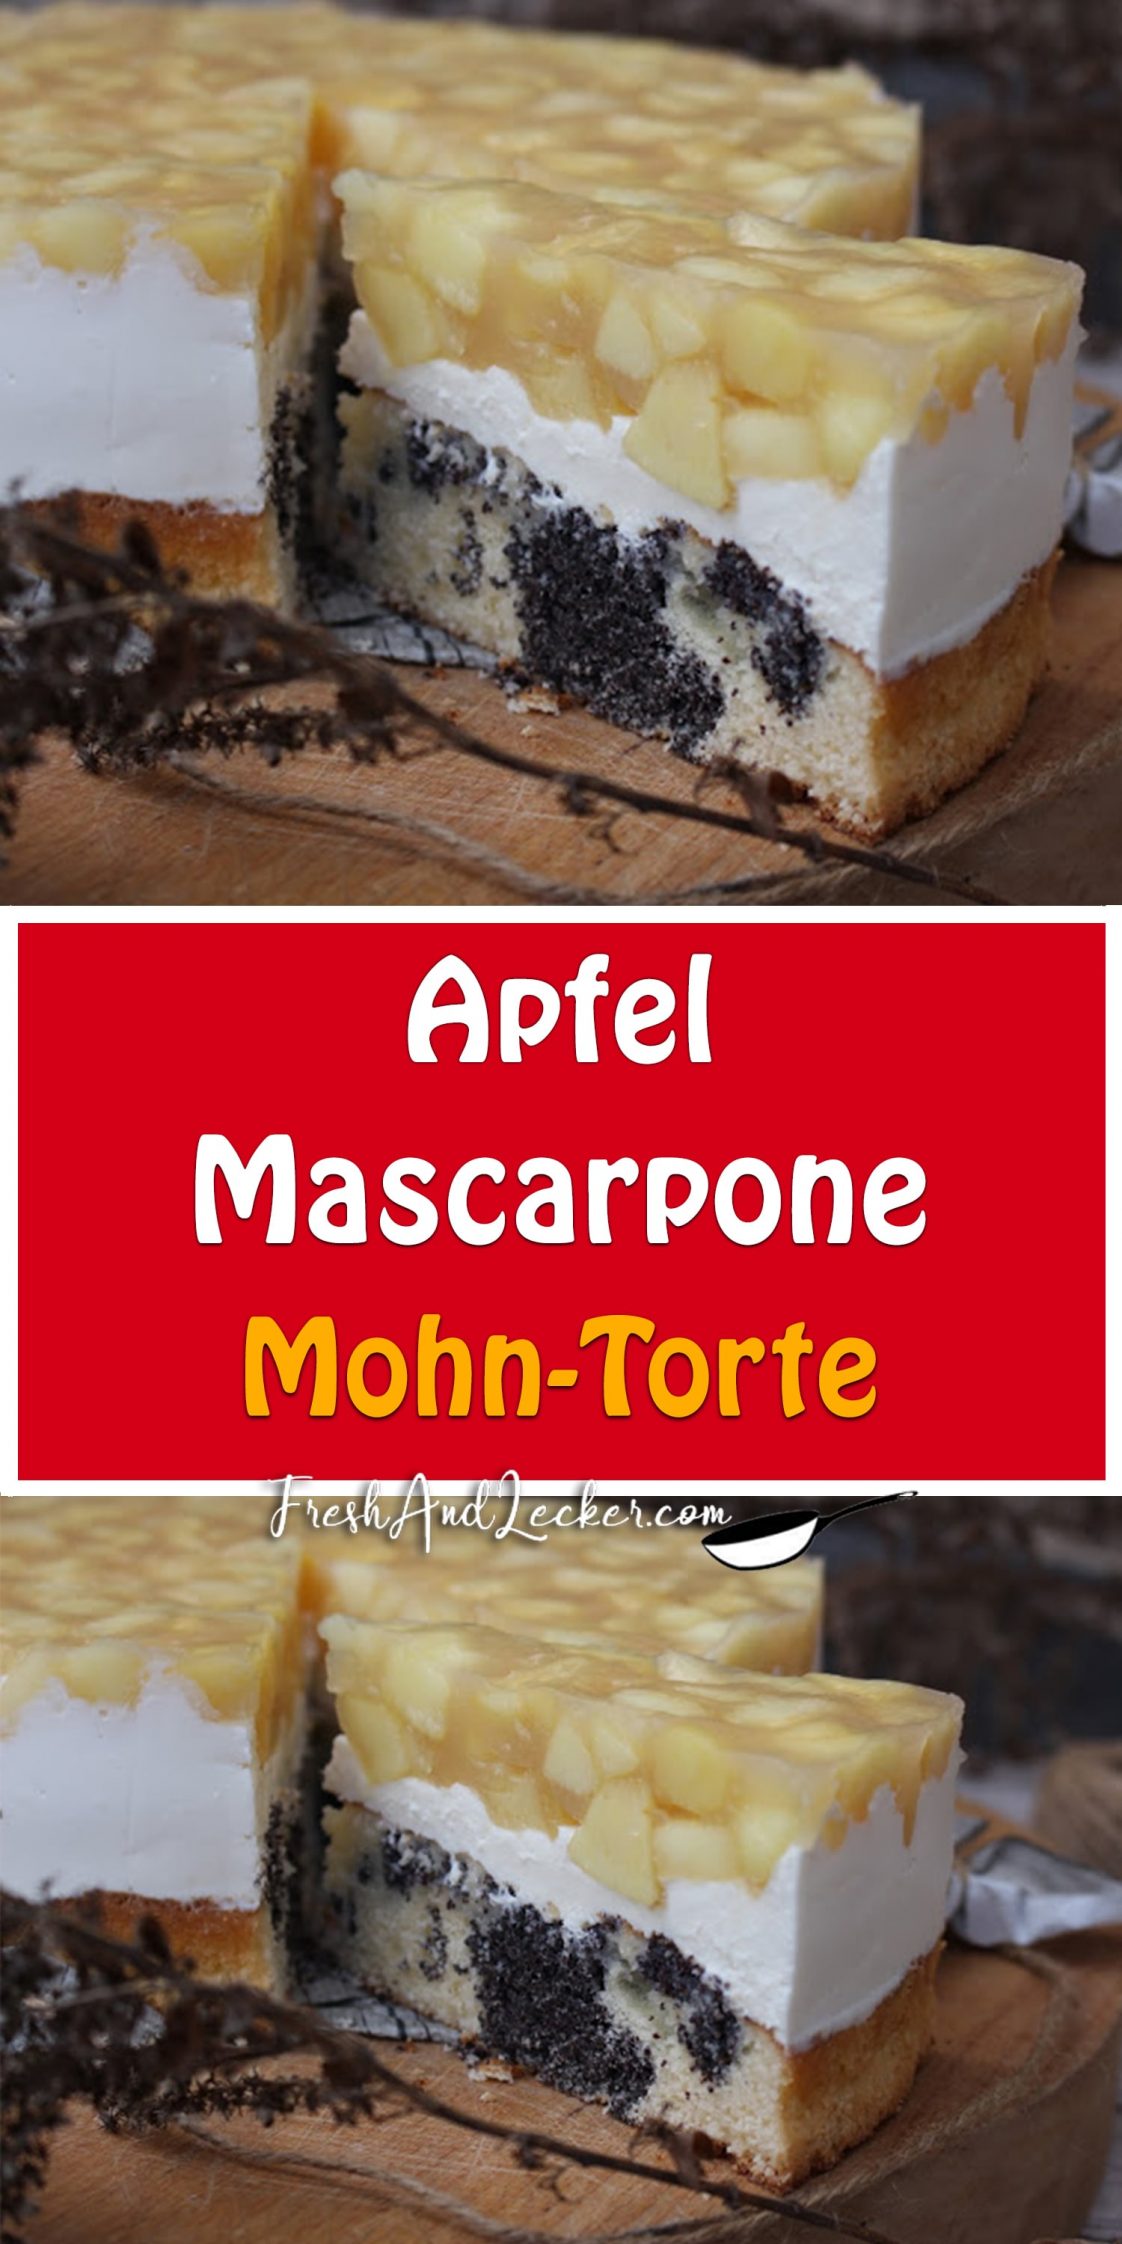 Apfel-Mascarpone-Mohn-Torte - Fresh Lecker